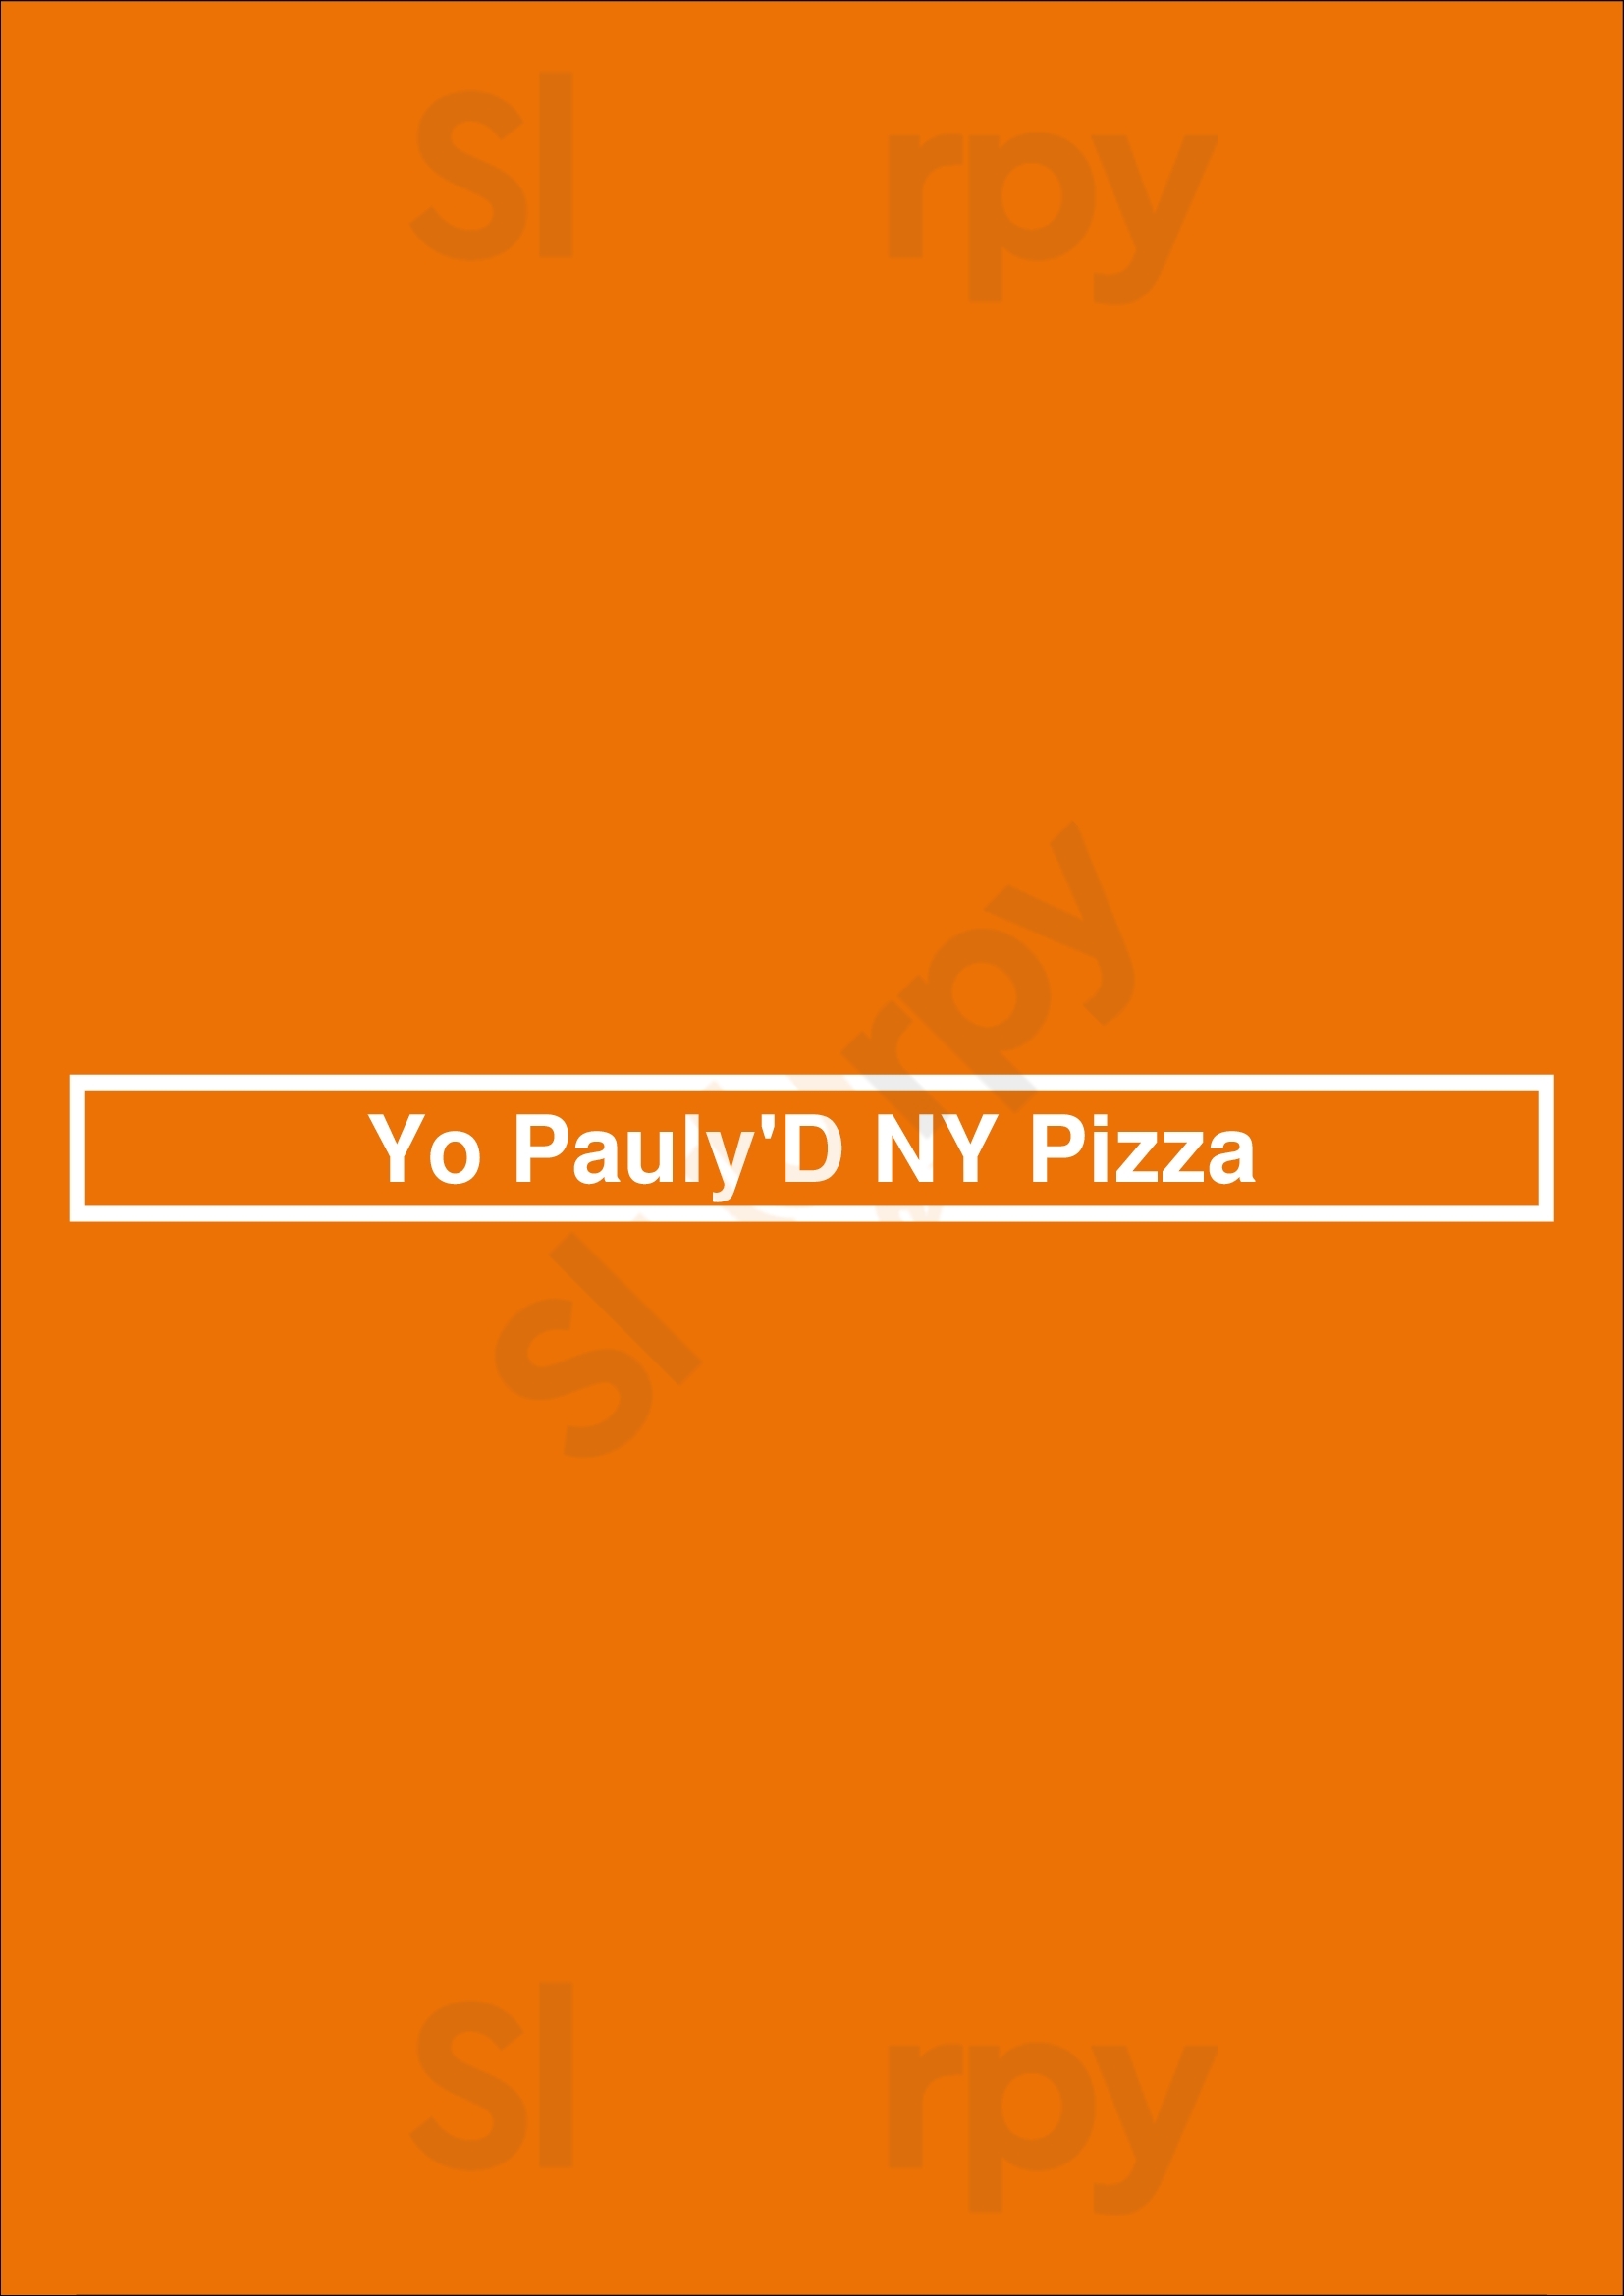 Yo Pauly'd Ny Pizza Scottsdale Menu - 1